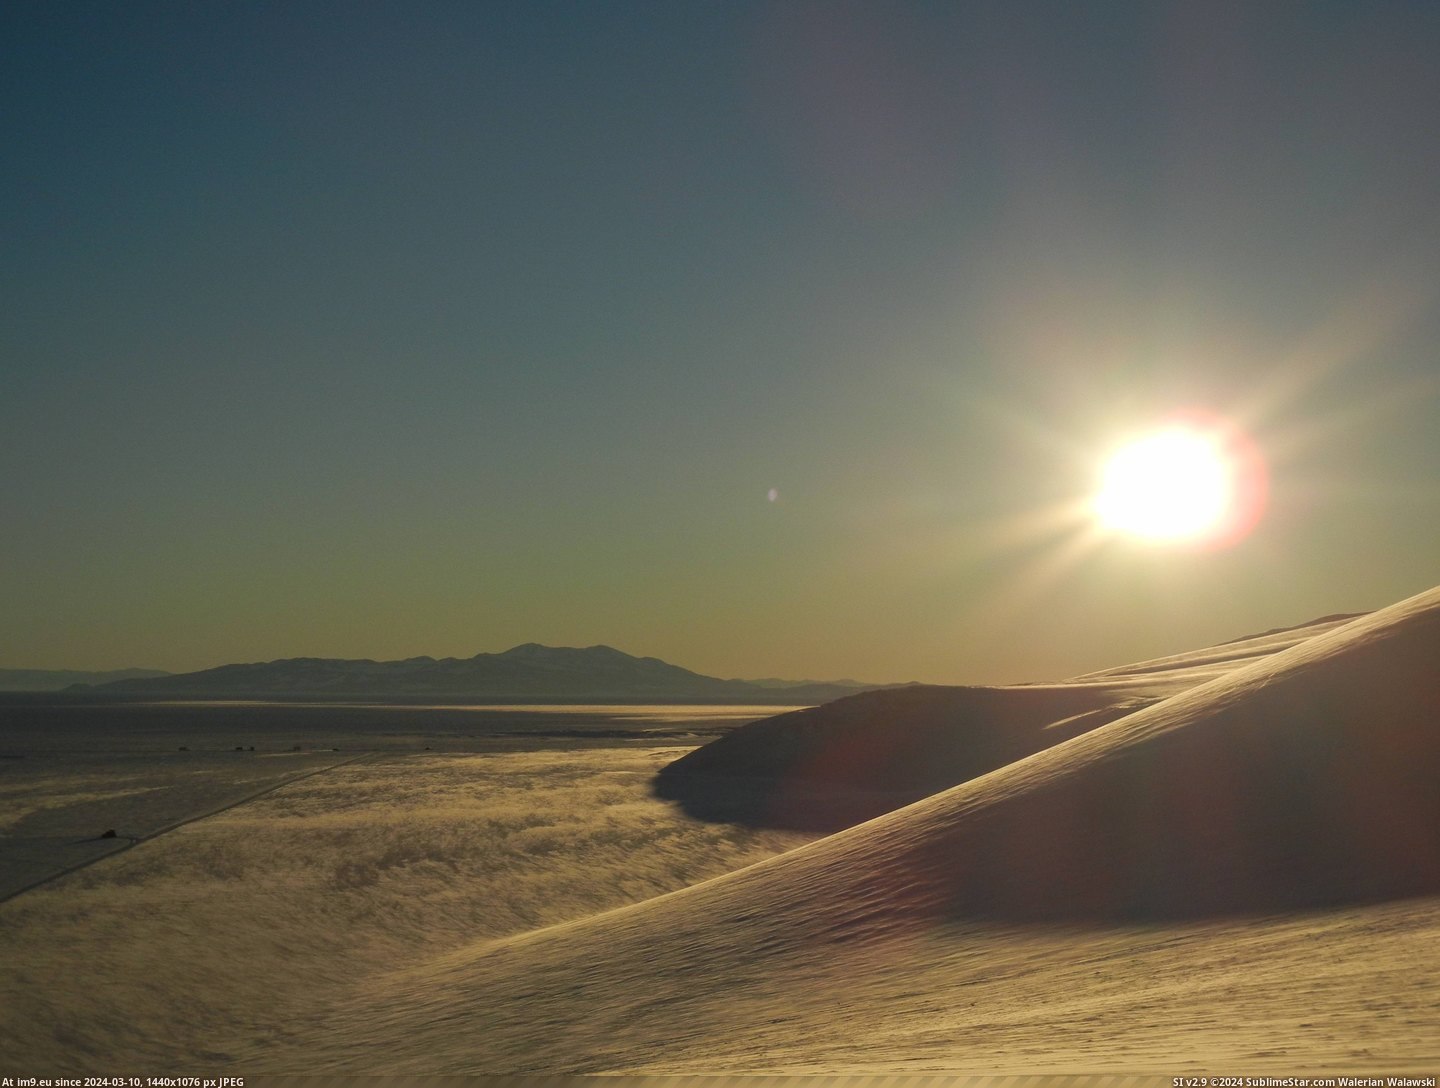 #4000x3000 #2am #Antarctica [Earthporn] 2am in Antarctica [4000x3000] OC Pic. (Obraz z album My r/EARTHPORN favs))